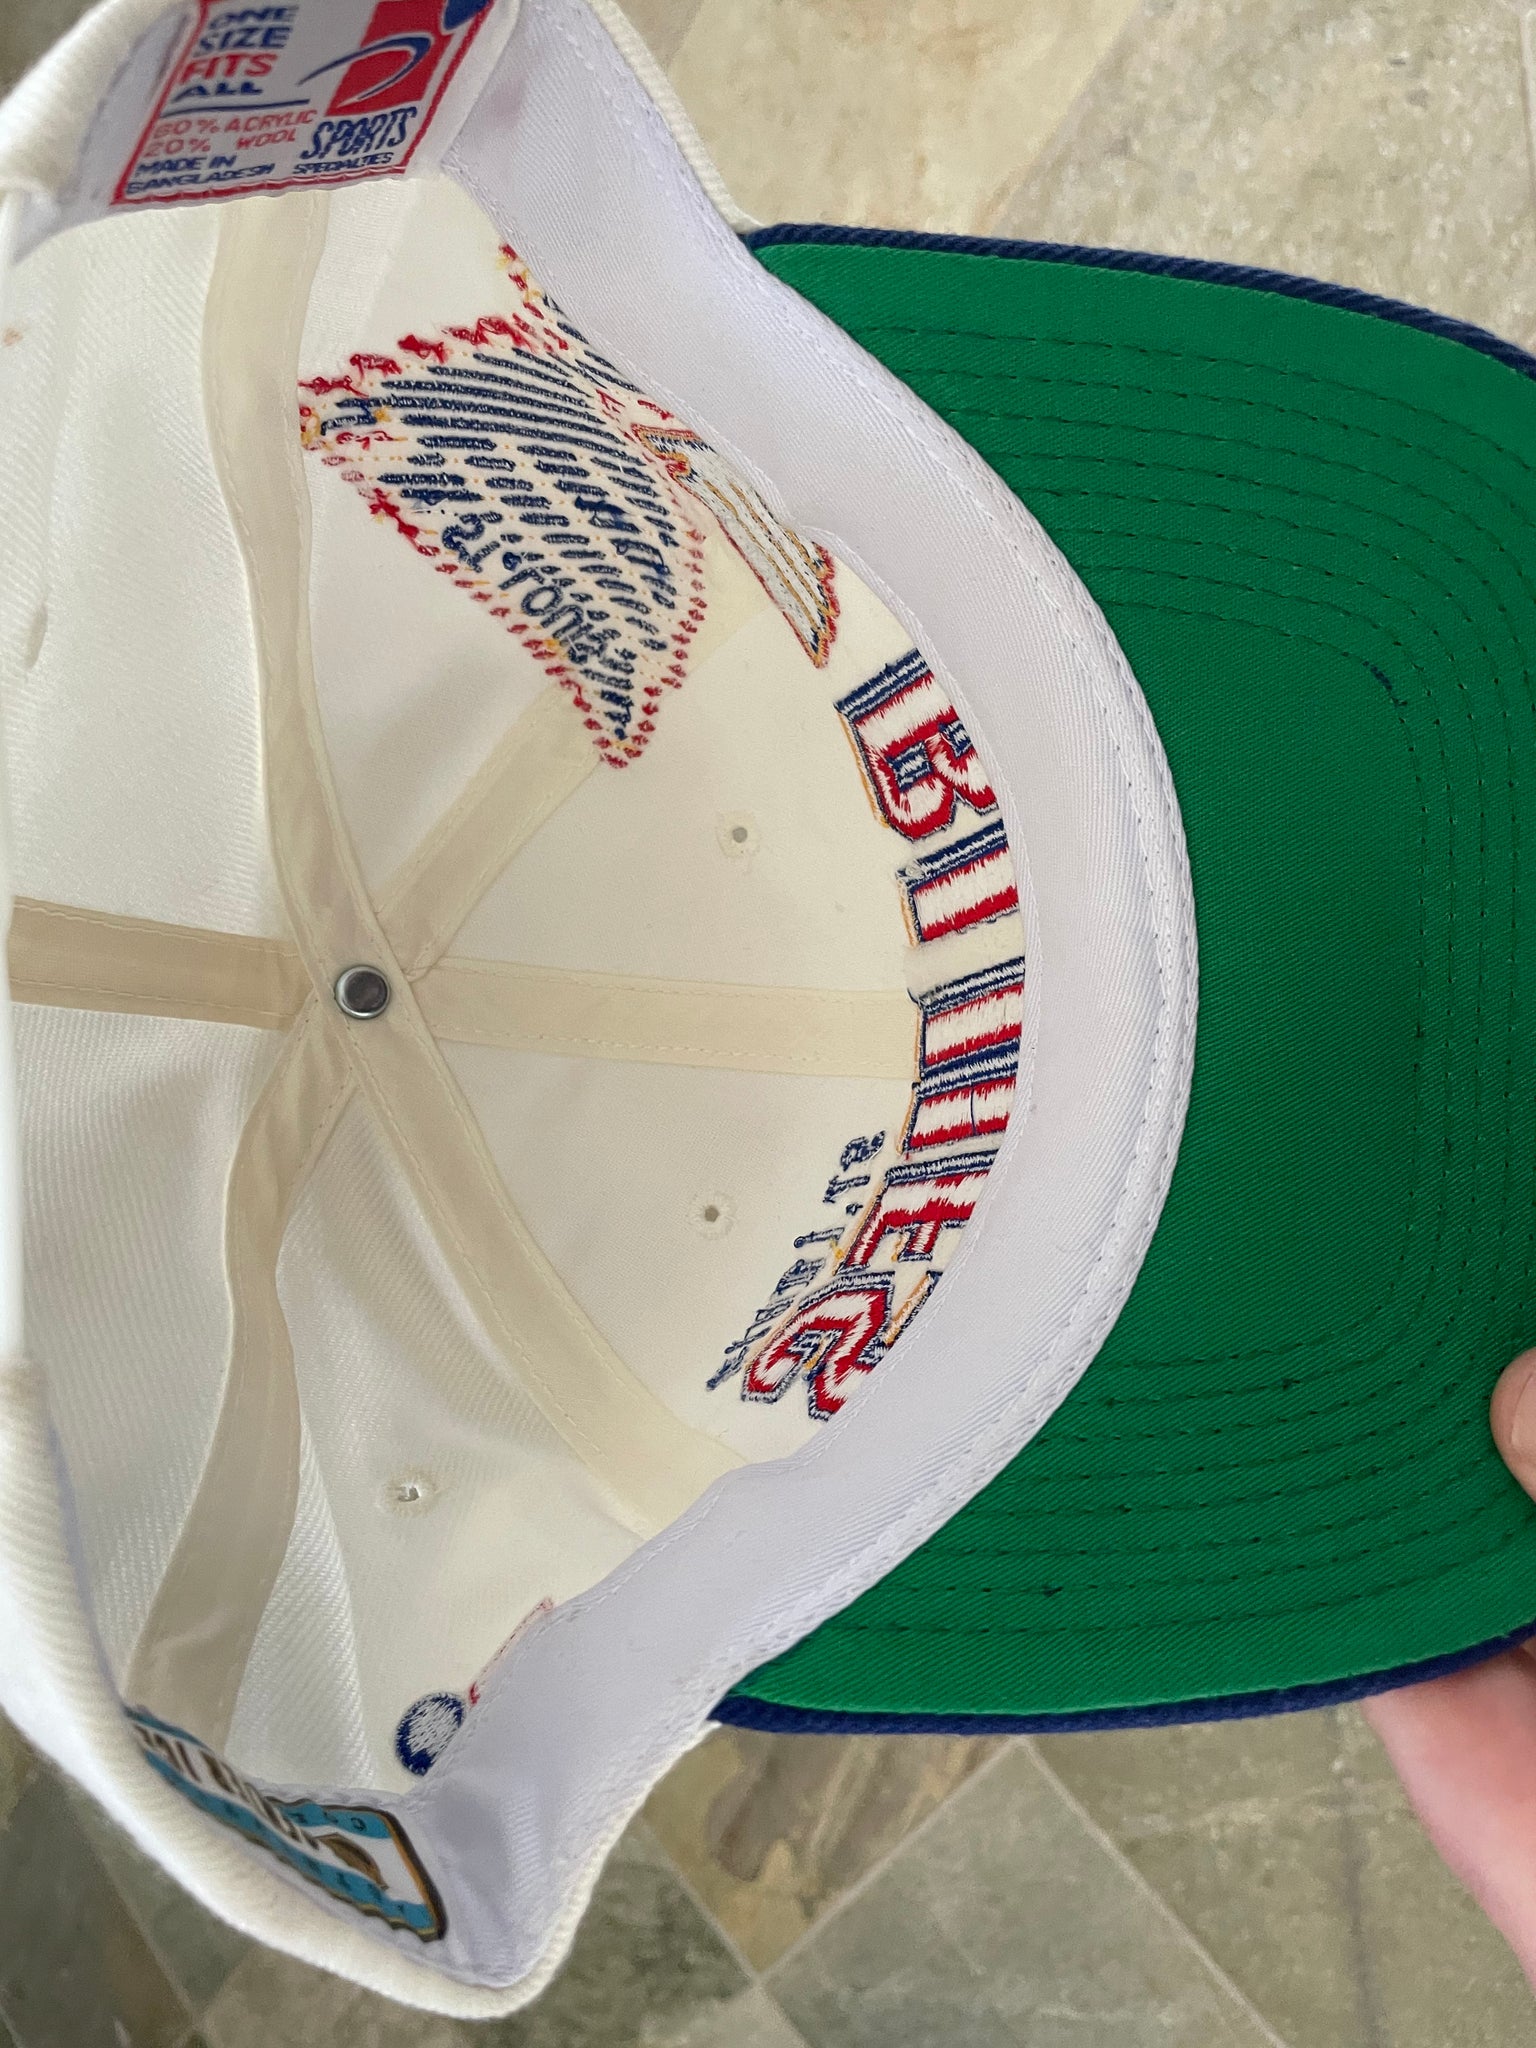 Vintage NHL St. Louis Blues Sports Specialties Shadow Snapback Hat